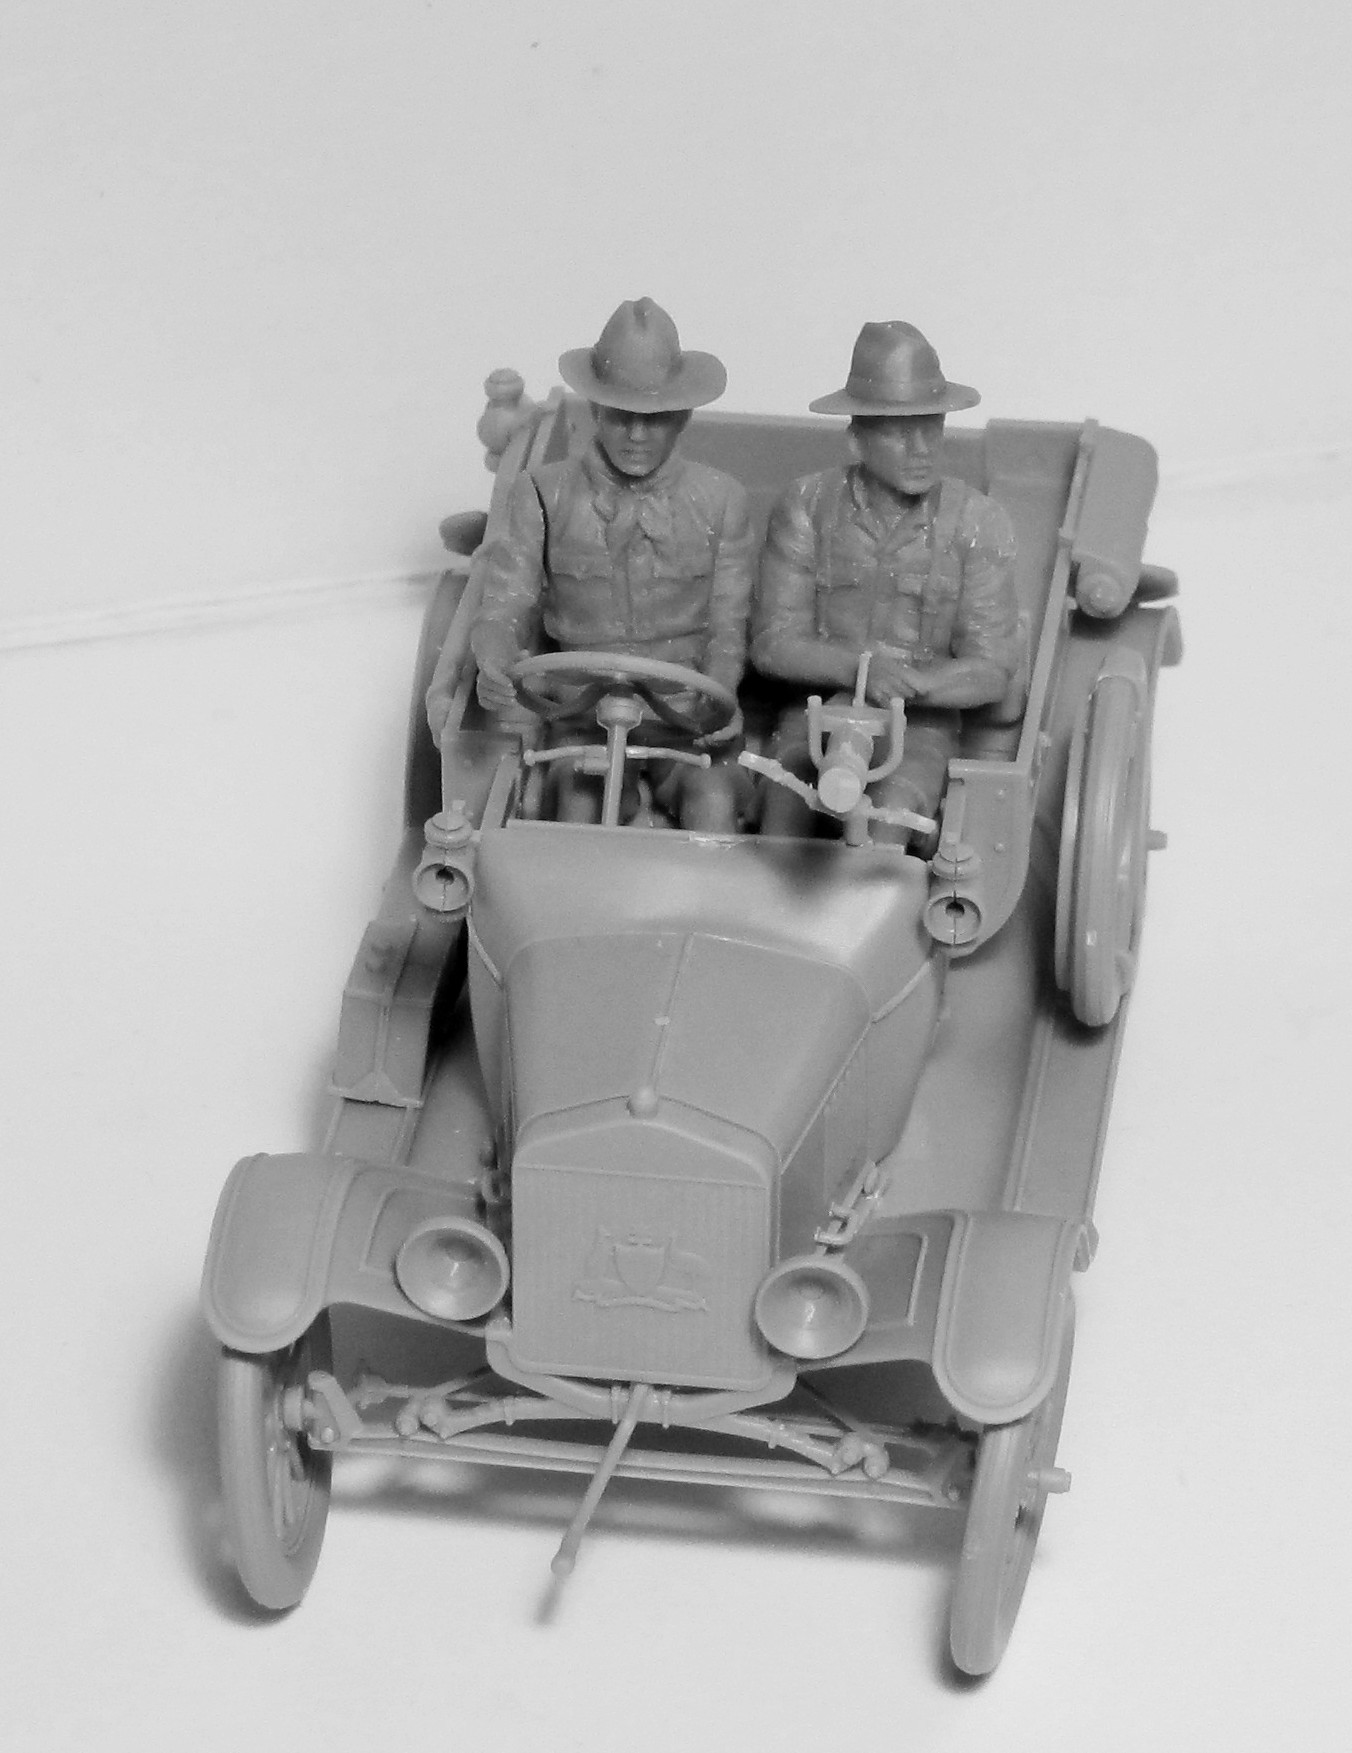 1/35 Водители АНЗАК (1917-1918 г.) #35707 / ANZAC Drivers (1917-1918) (2 figures) (100% new molds)